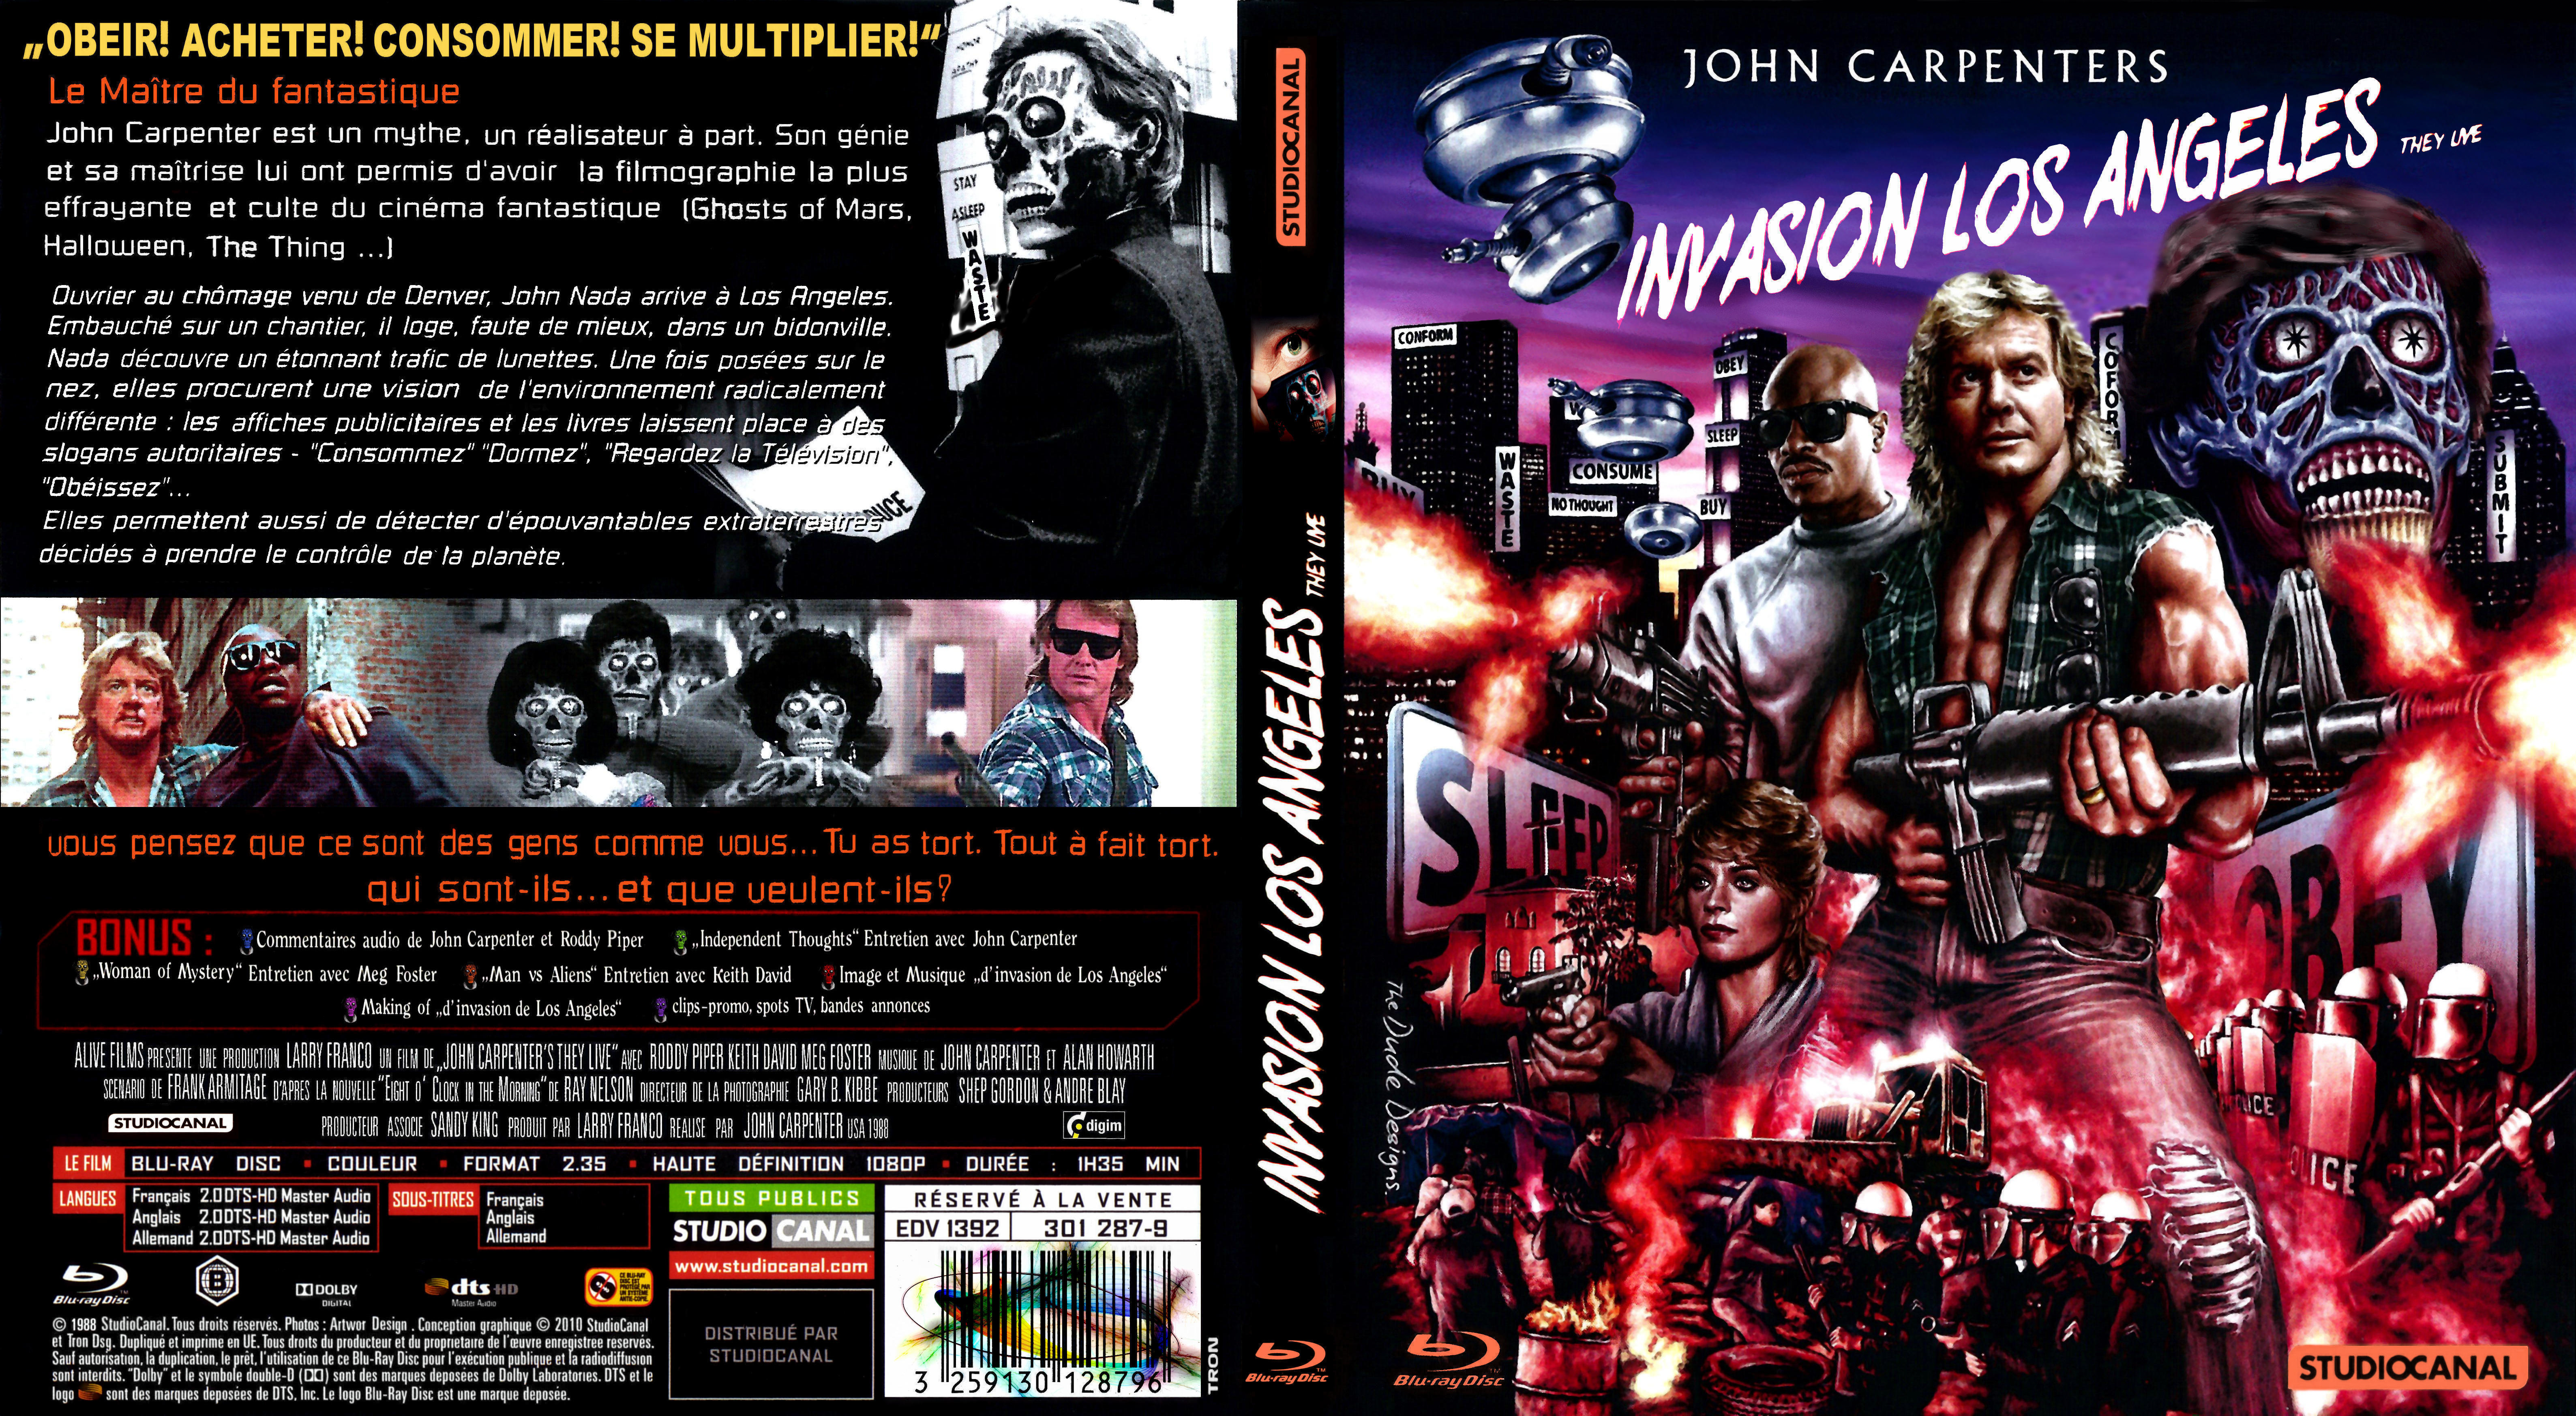 Jaquette DVD Invasion Los Angeles custom (BLU-RAY)